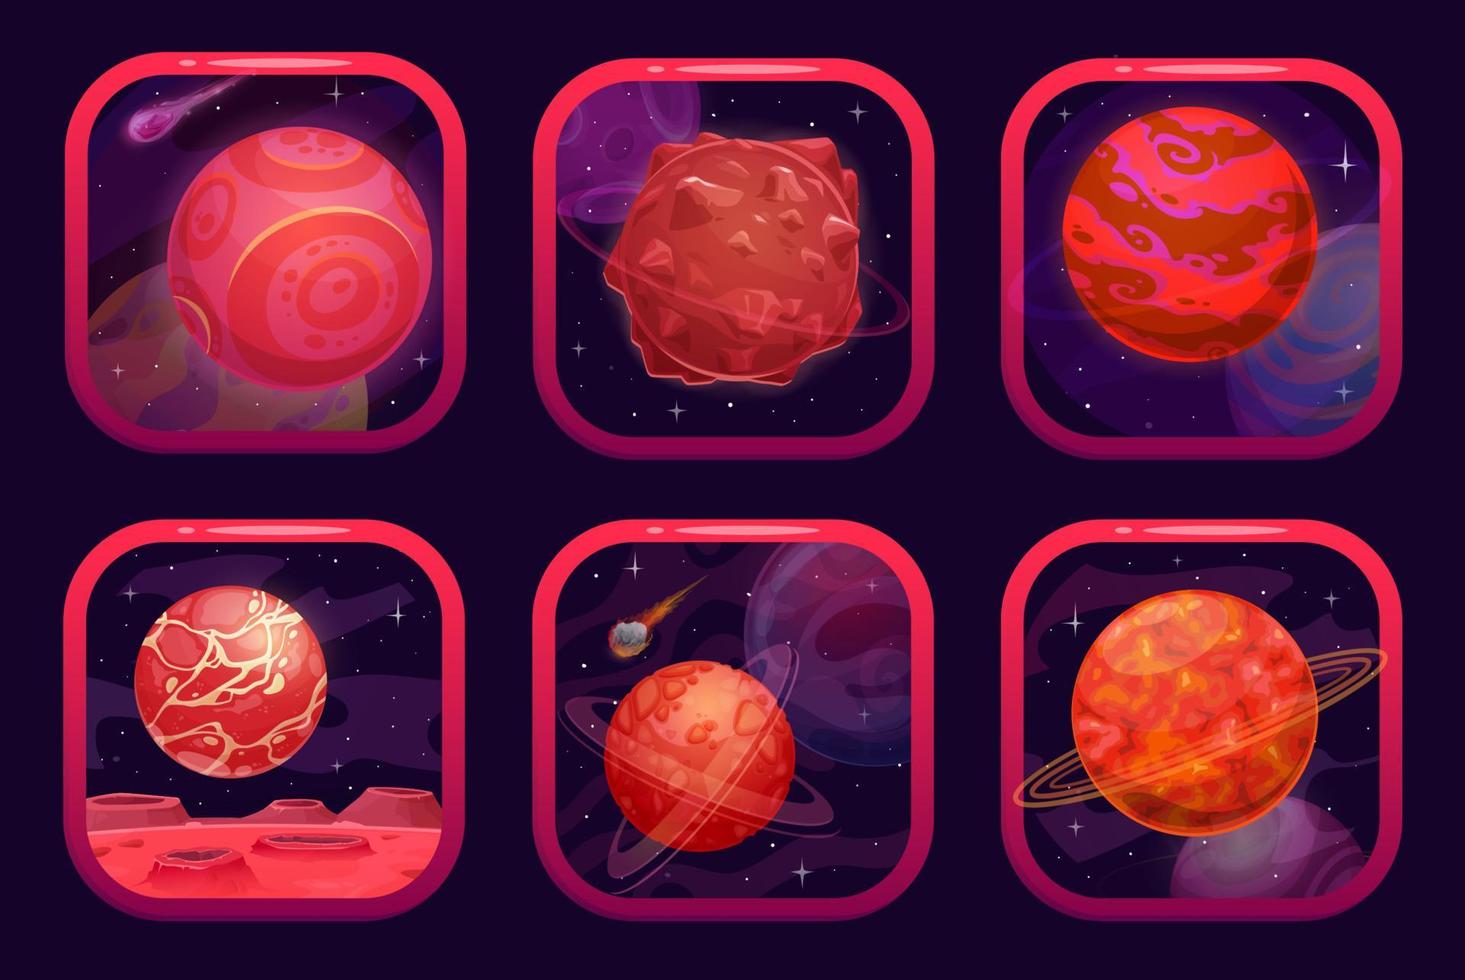 espacio juego aplicación íconos con galaxia rojo planetas vector